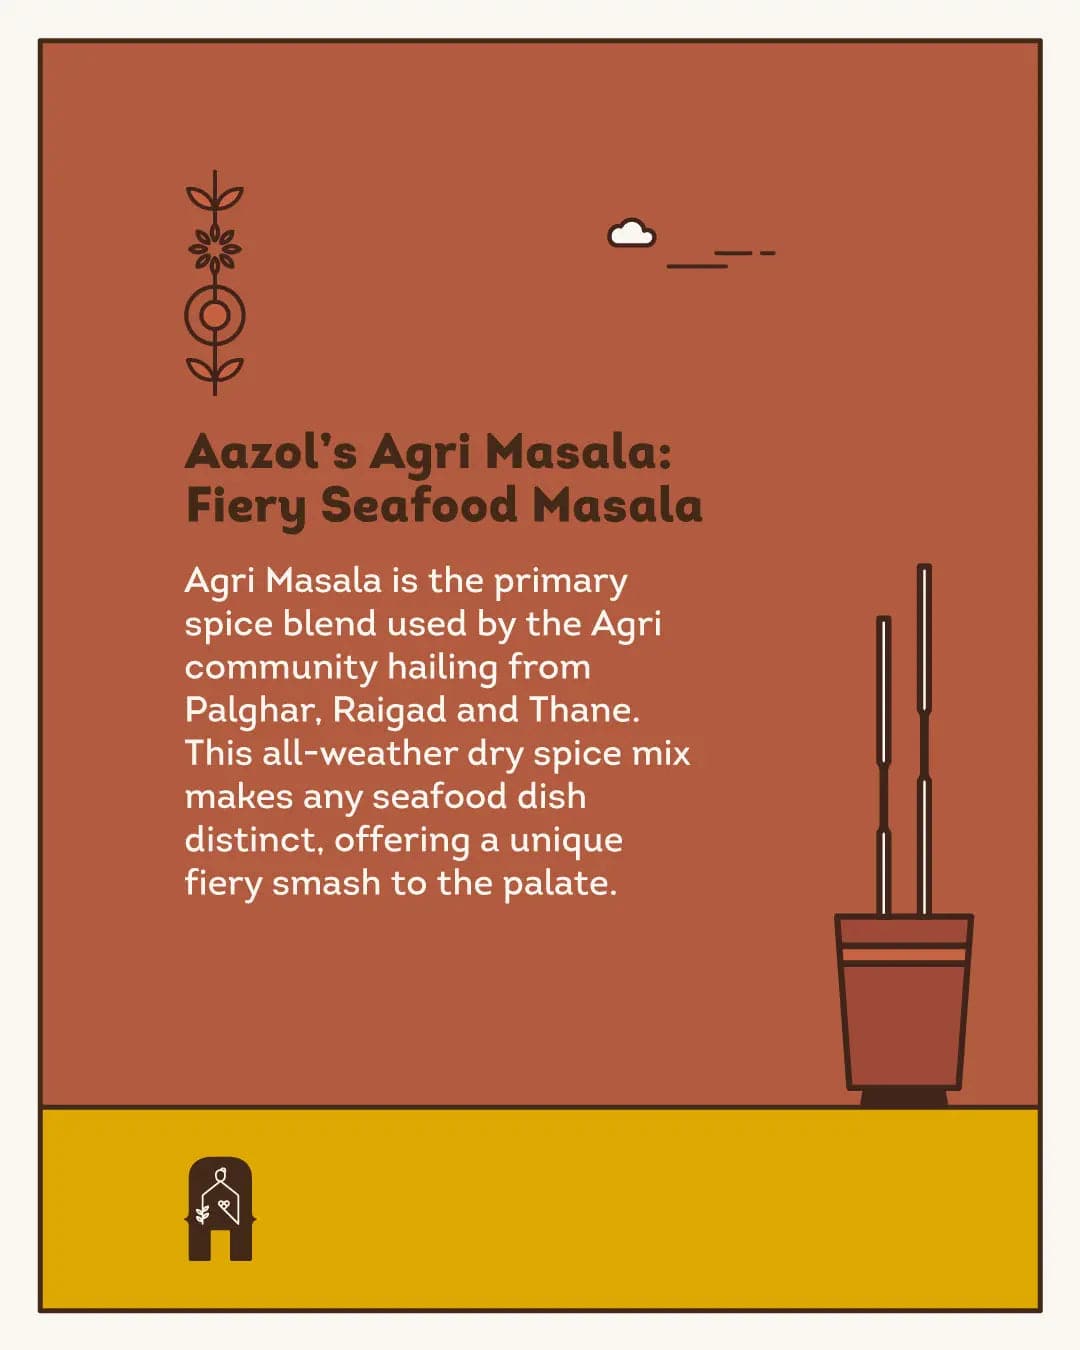 Agri Masala: Fiery Seafood Masala - 100g Aazol